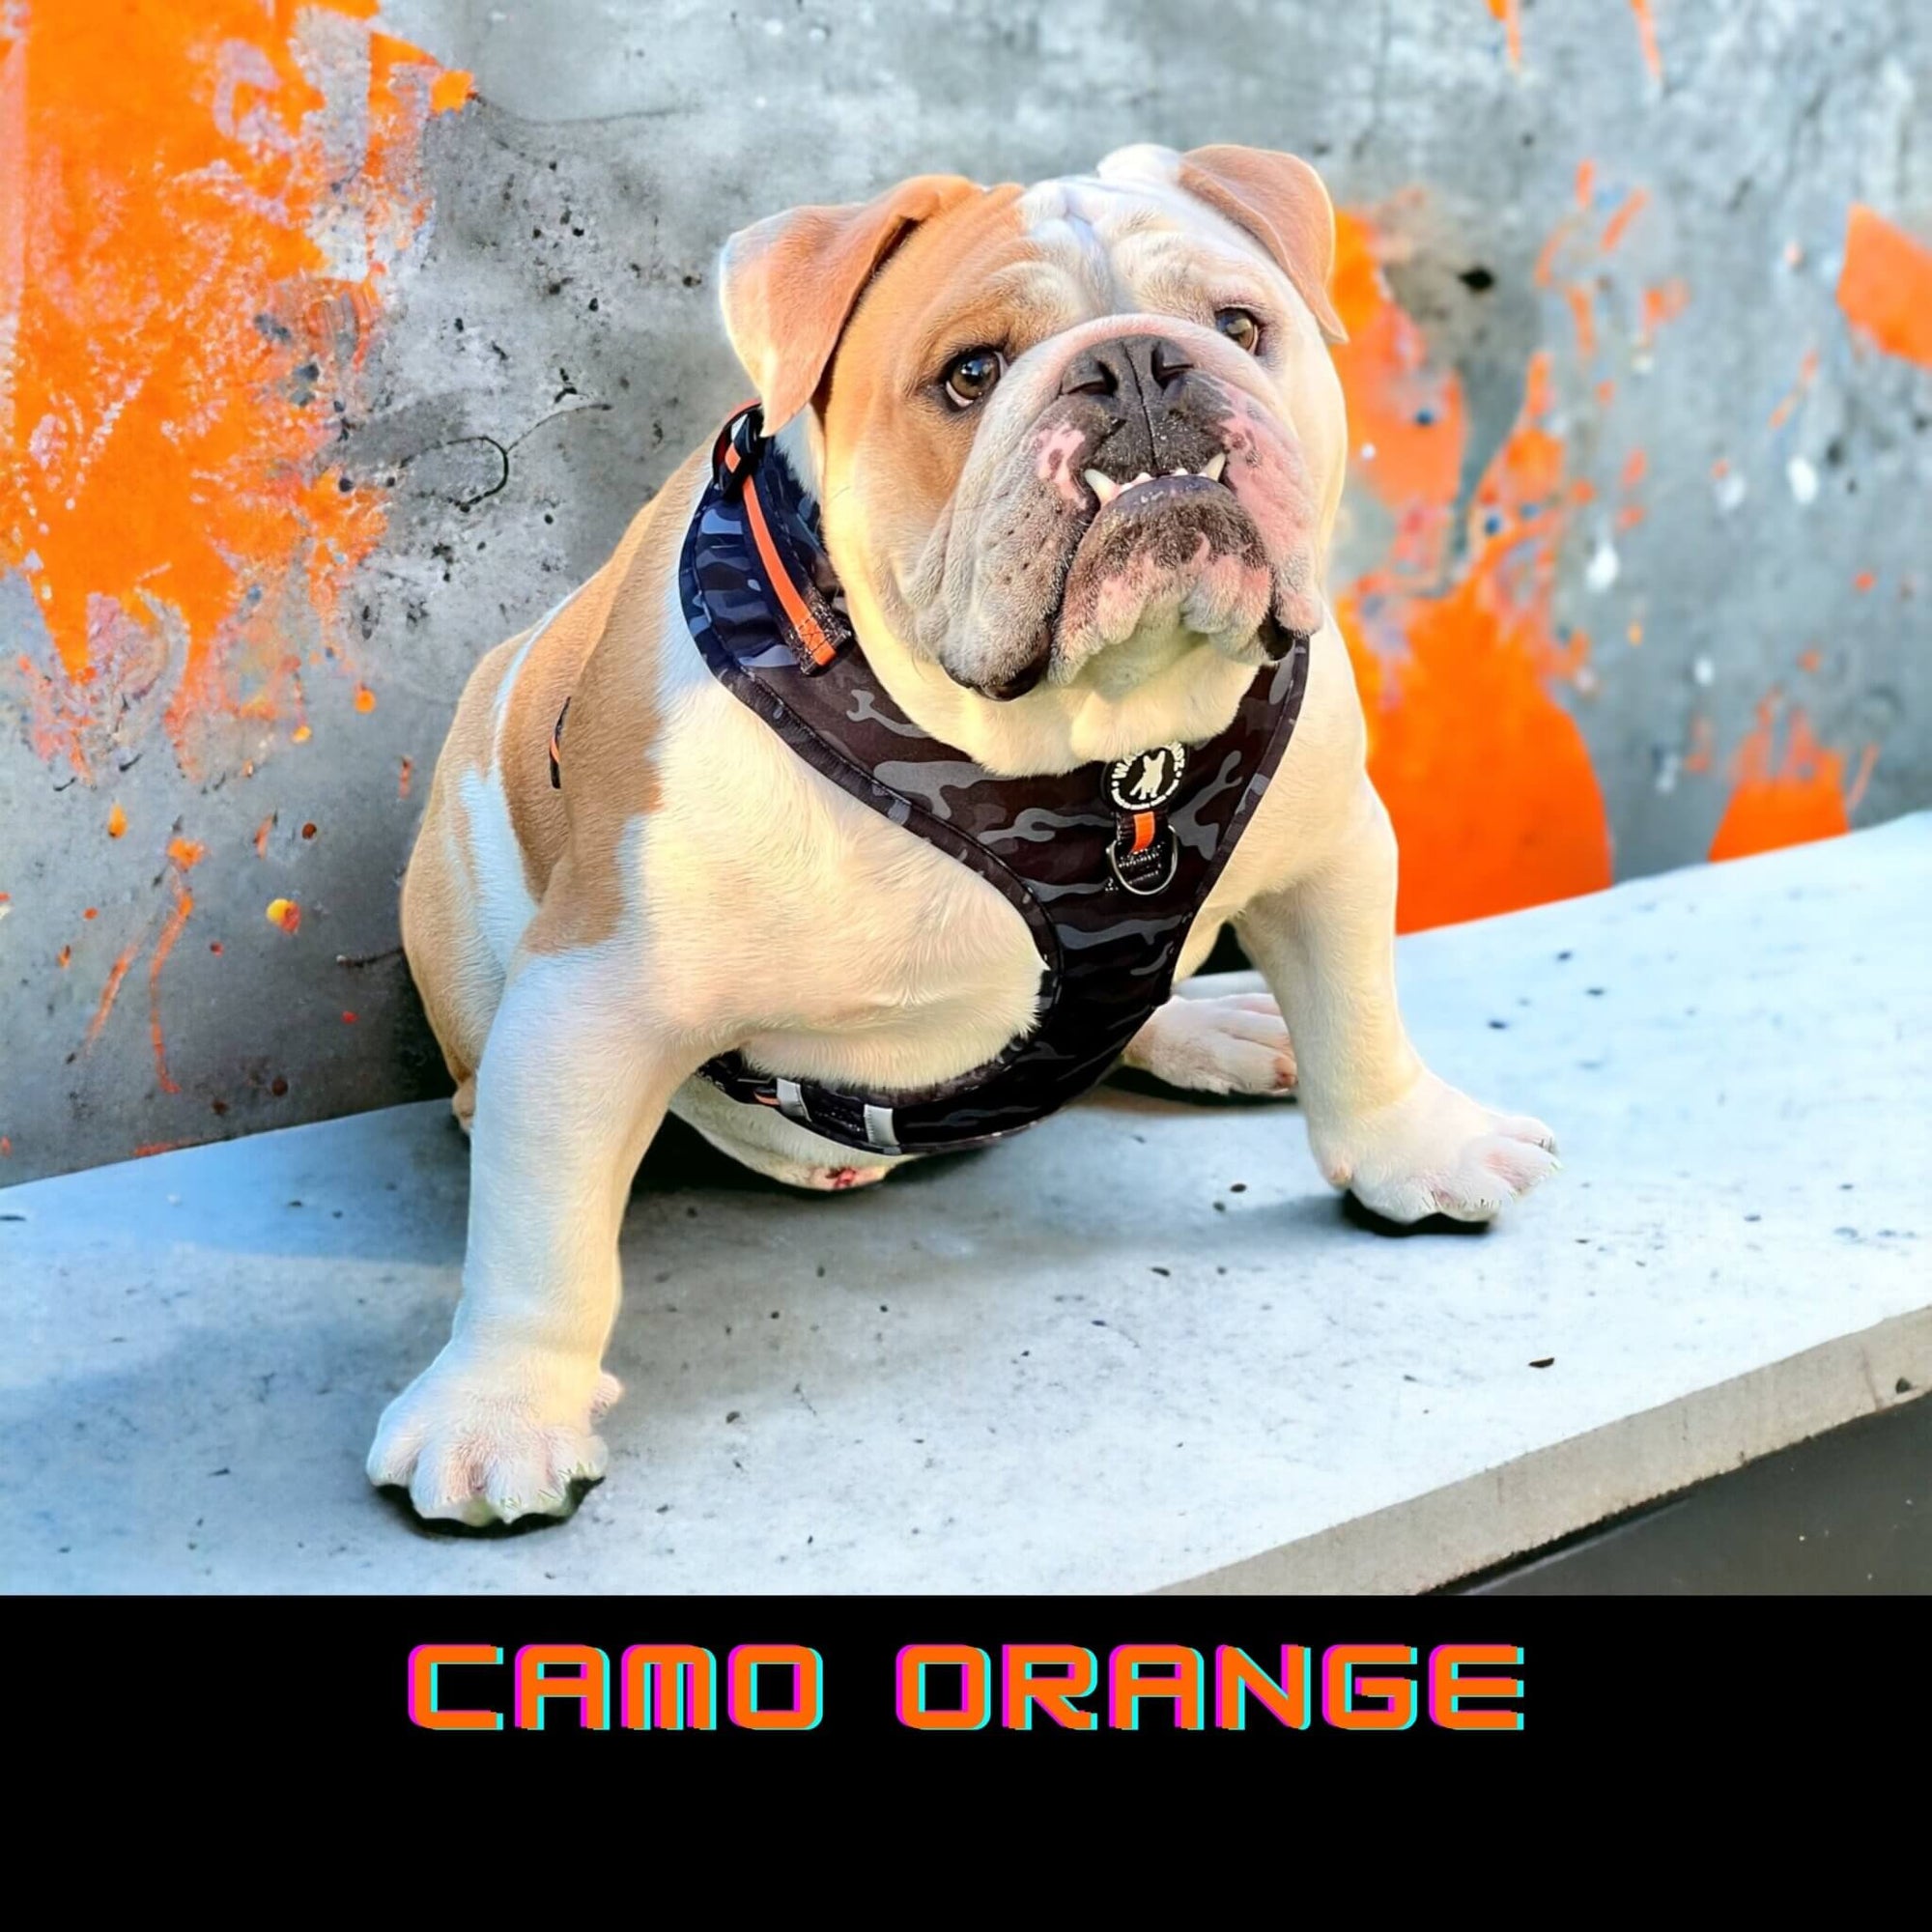 No Pull Dog Harness in Camo Orange worn by English Bulldog with orange graffiti background